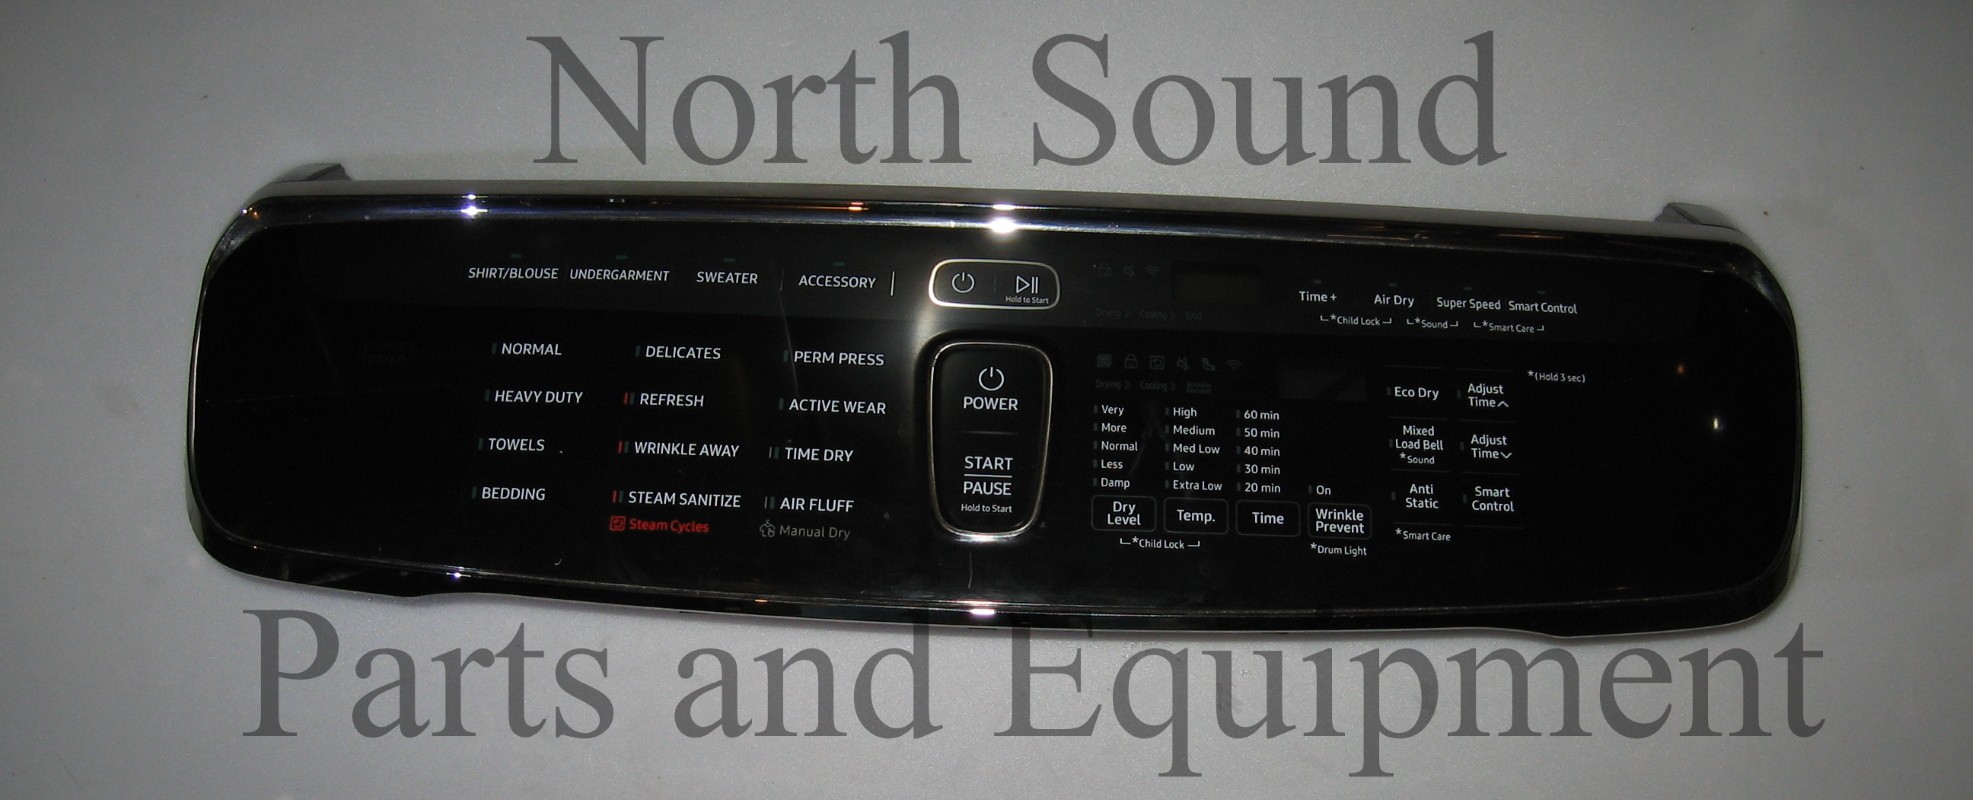 Samsung Dryer control Panel DC97-20007A